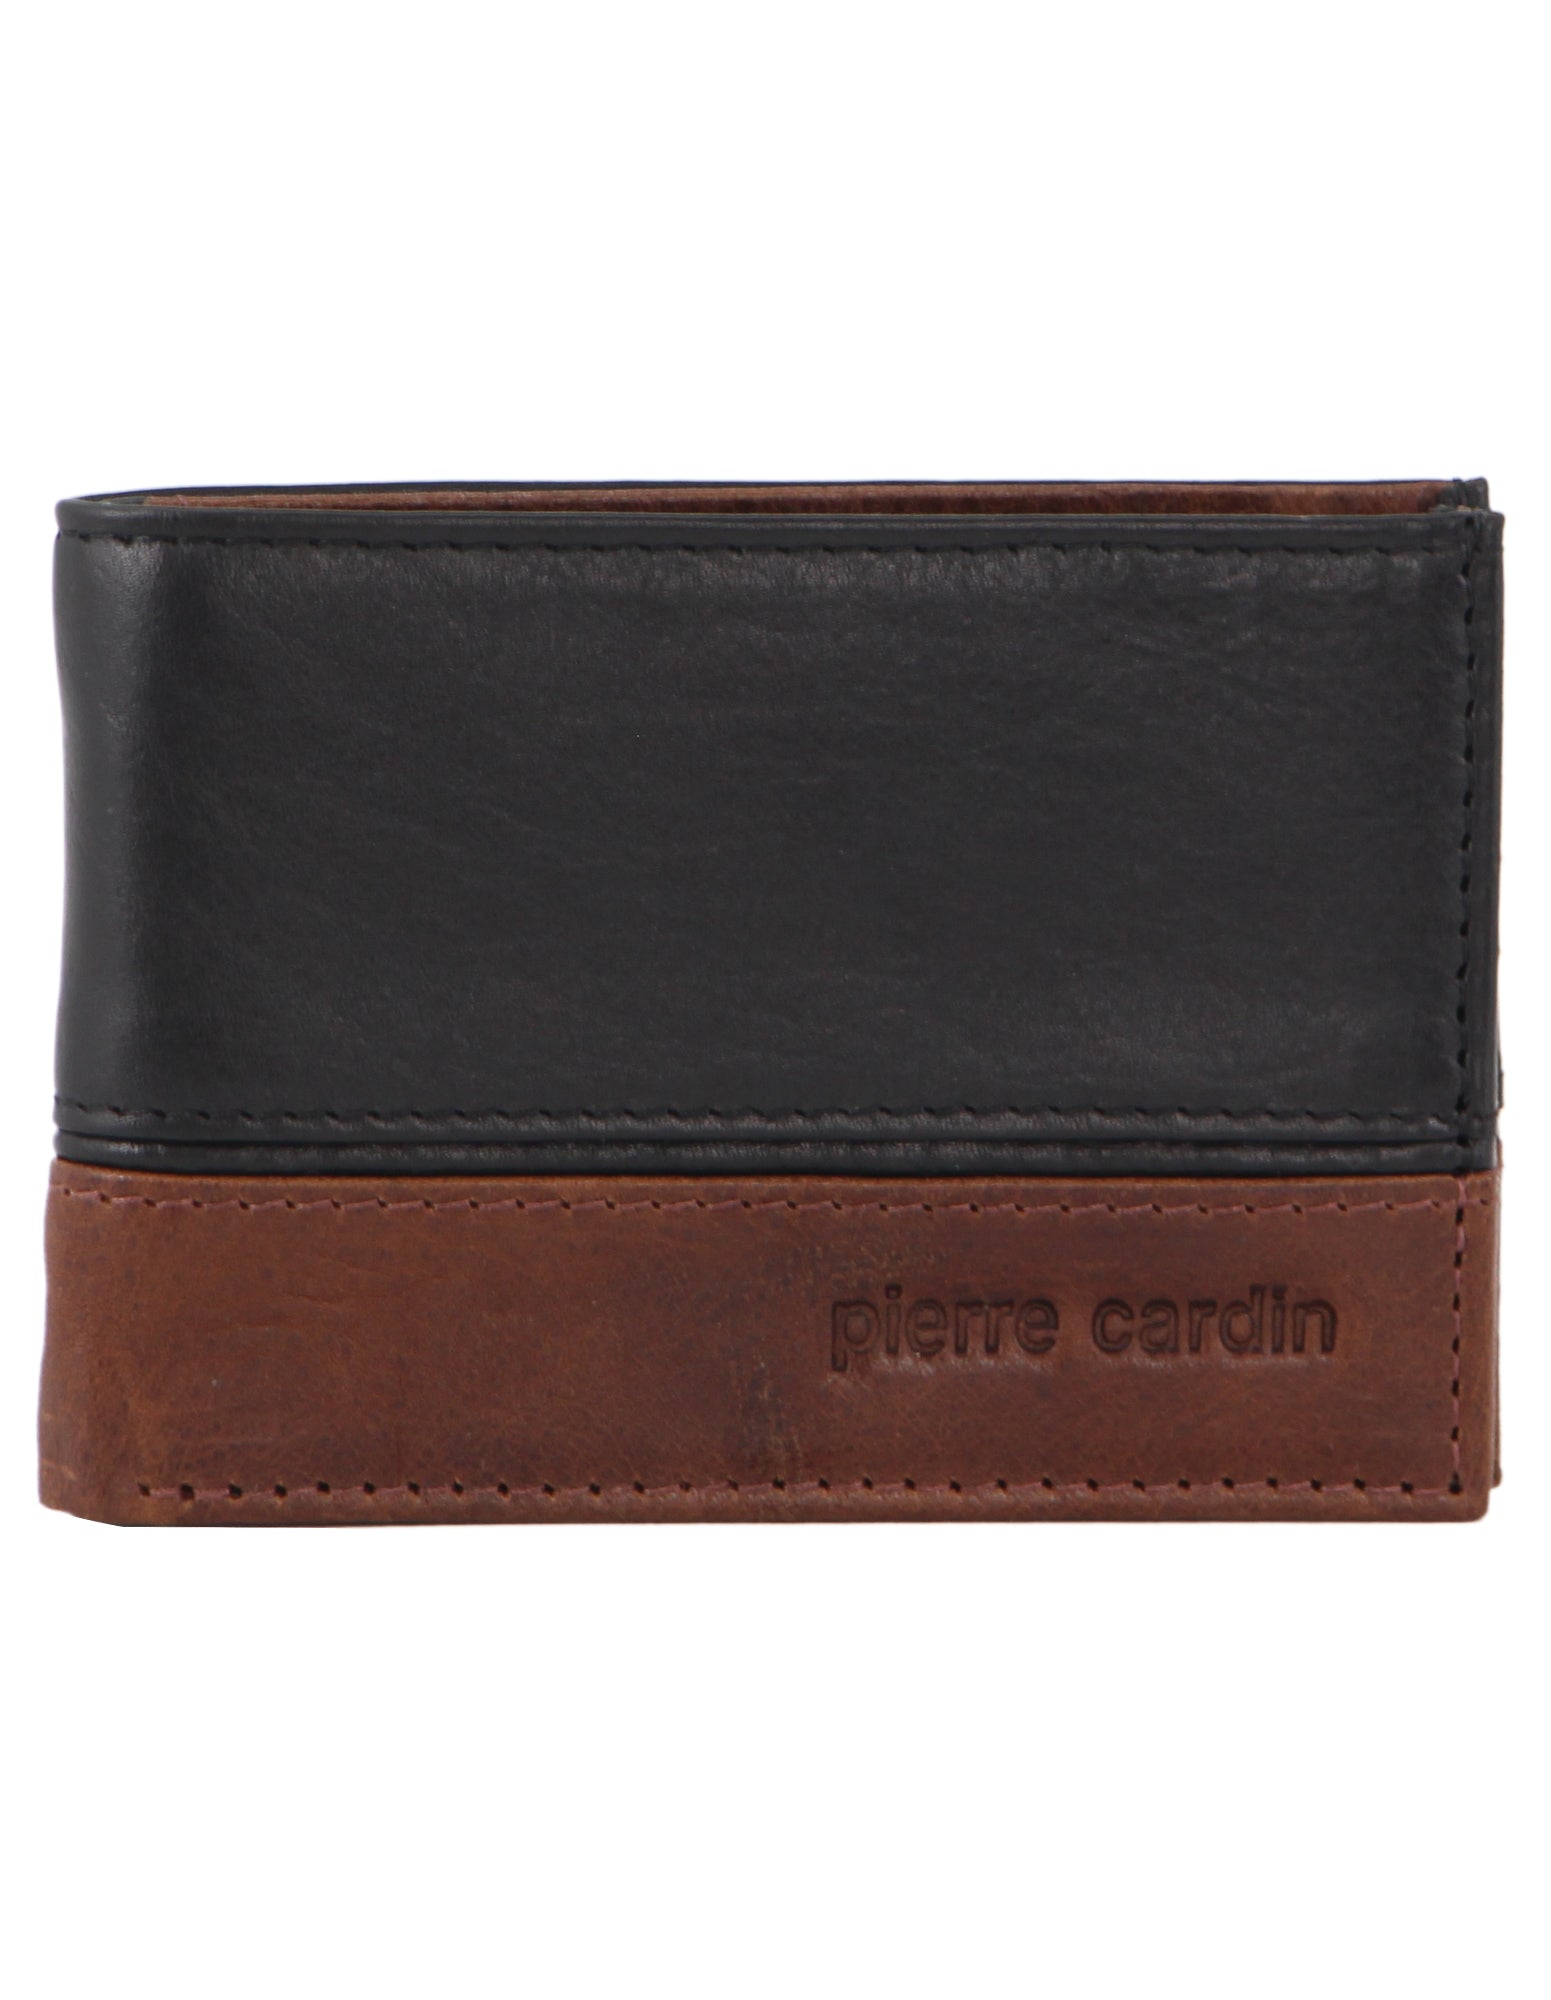 Pierre Cardin Rustic Leather Mens 2 Tone Slim Bi-Fold Wallet in Black-Cognac in Black